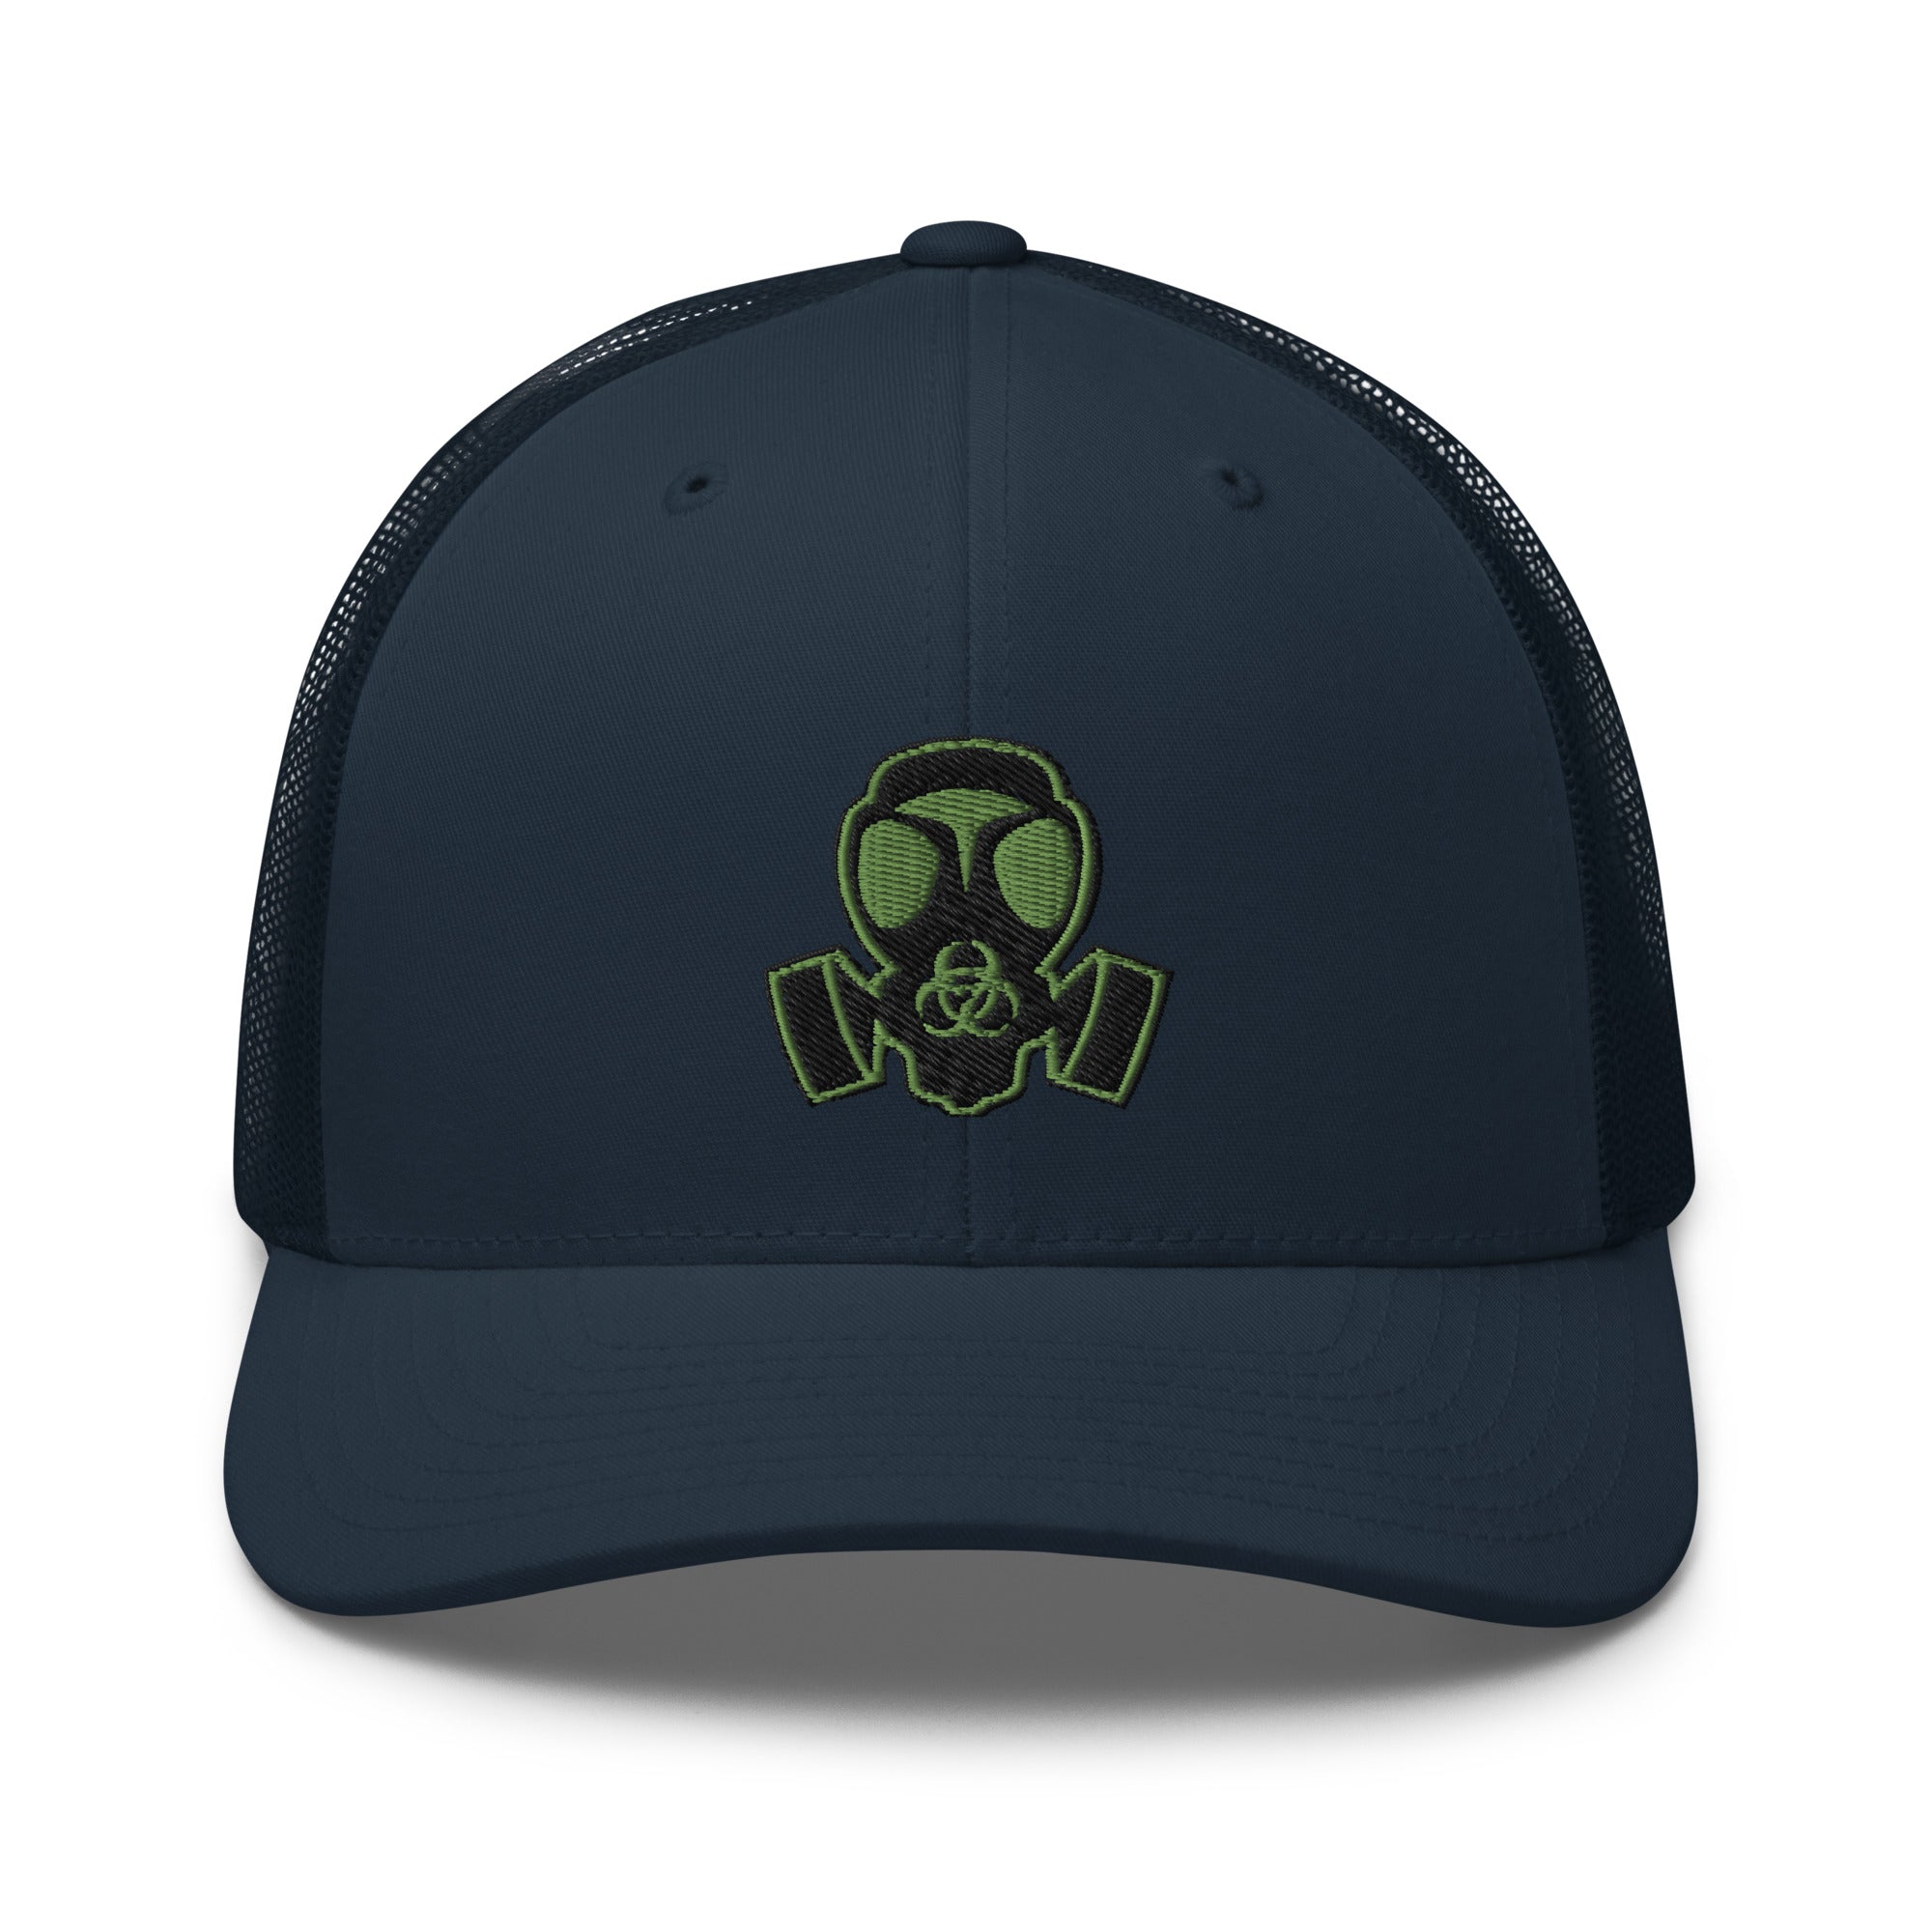 Green Bio Hazard Gas Mask Embroidered Retro Trucker Cap Snapback Hat